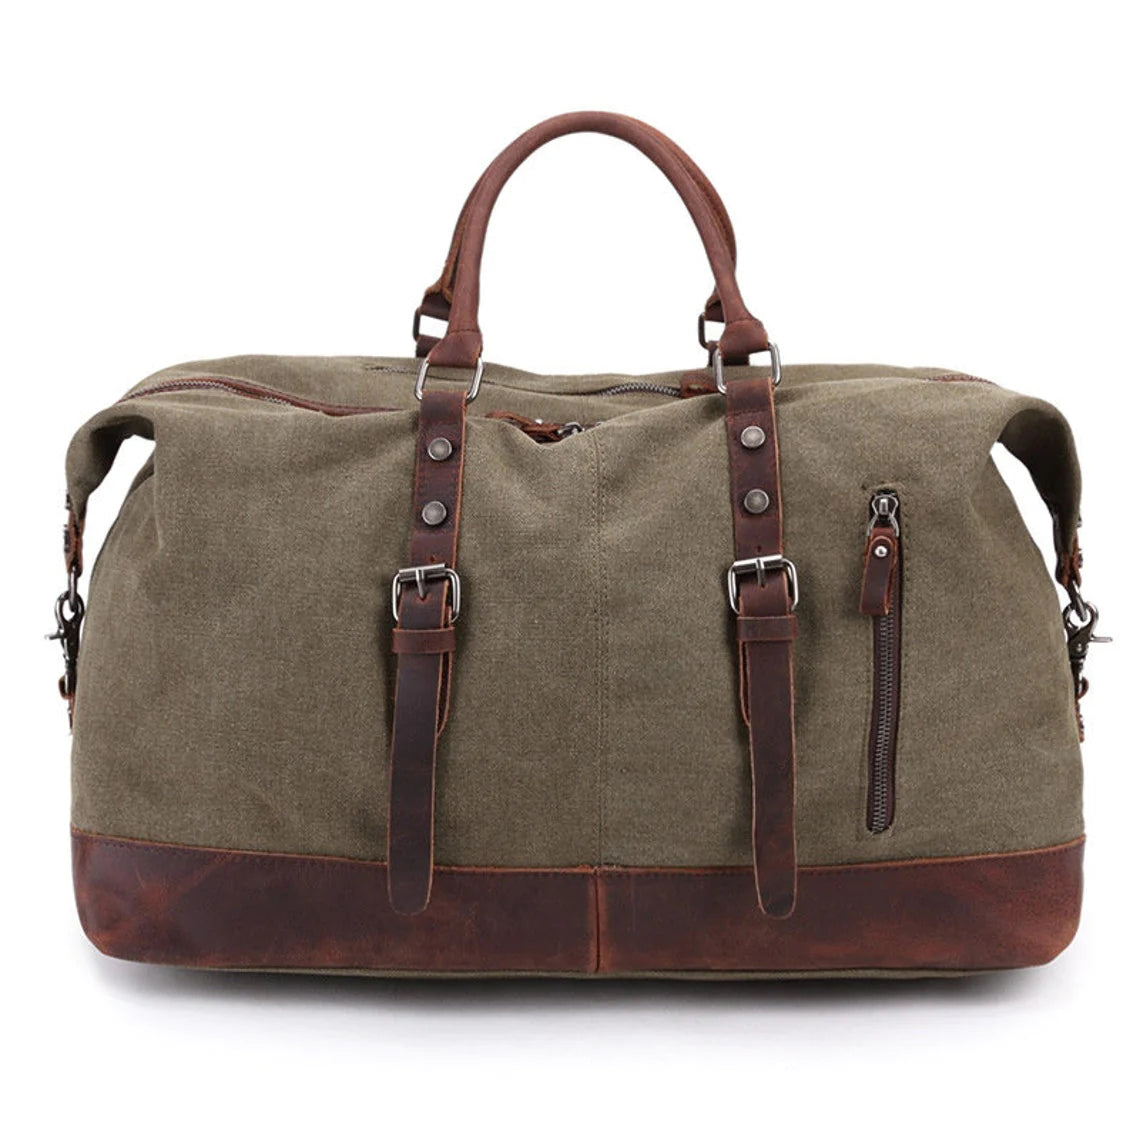 Handmade Canvas Leather Travel Bag Duffle Bag Holdall Luggage Weekende ...